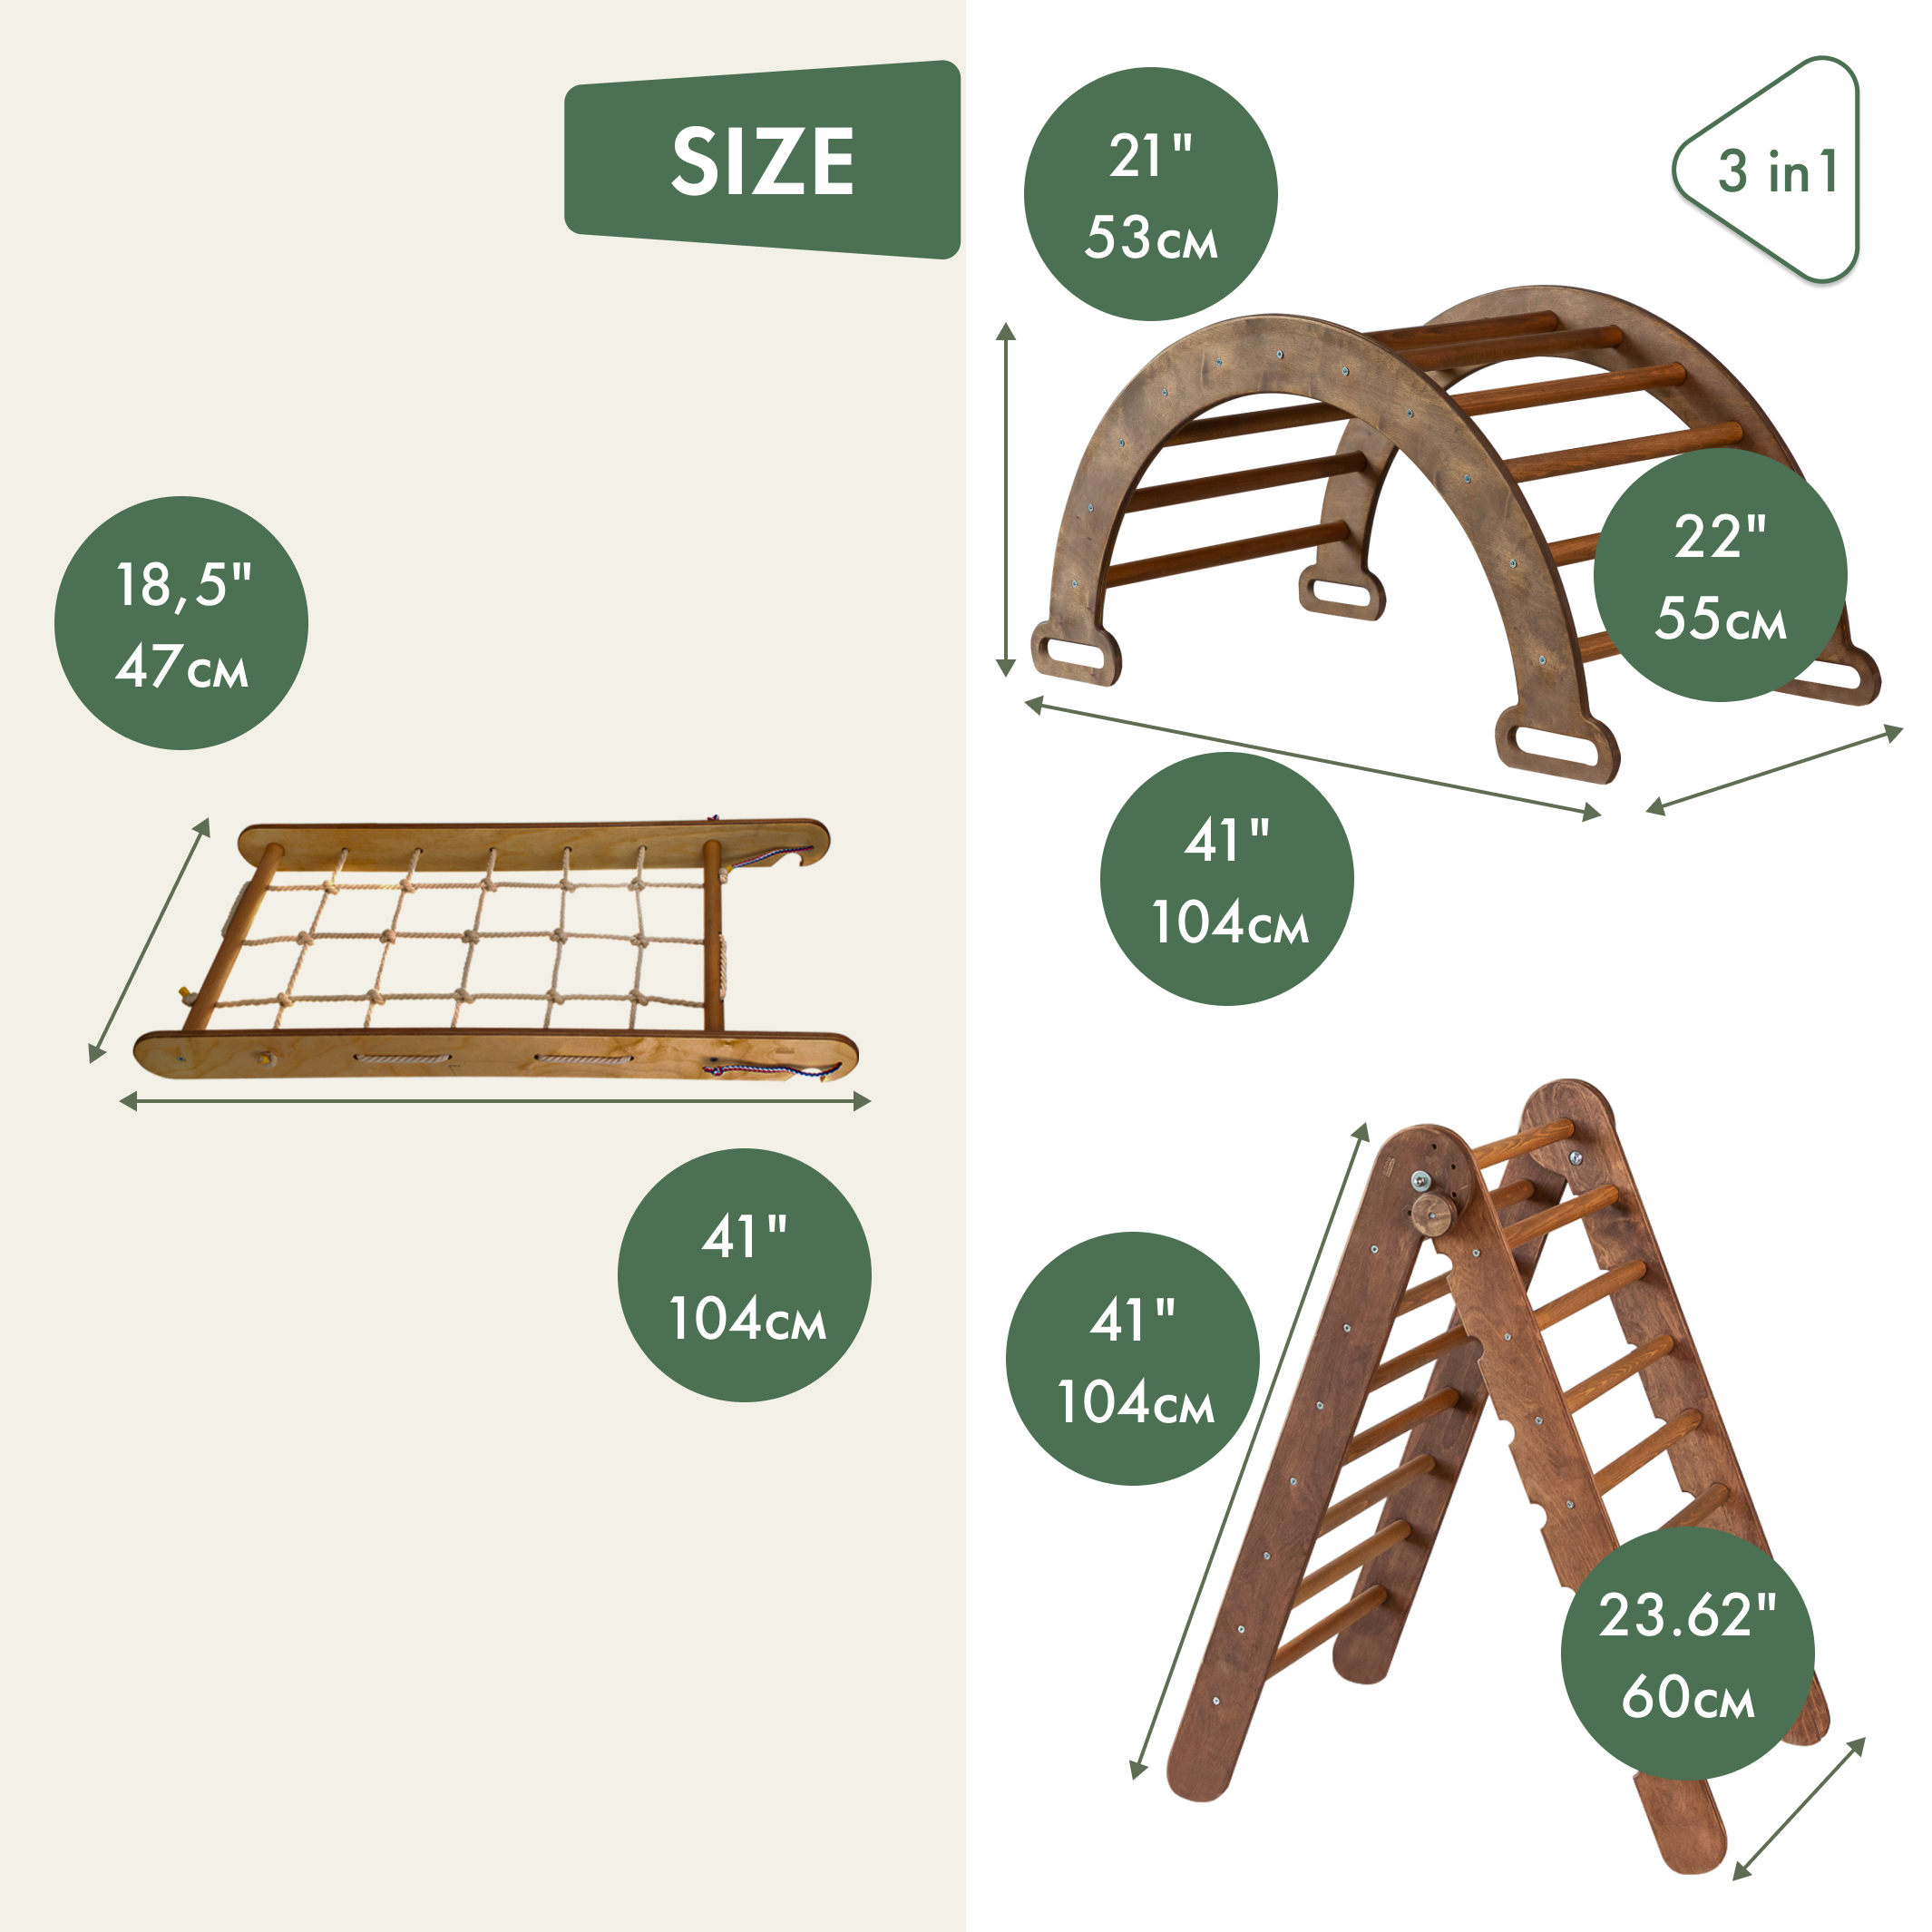 3-in-1 Montessori Climbing Set: Triangle Ladder + Arch/Rocker Balance + Slide Board – Chocolate